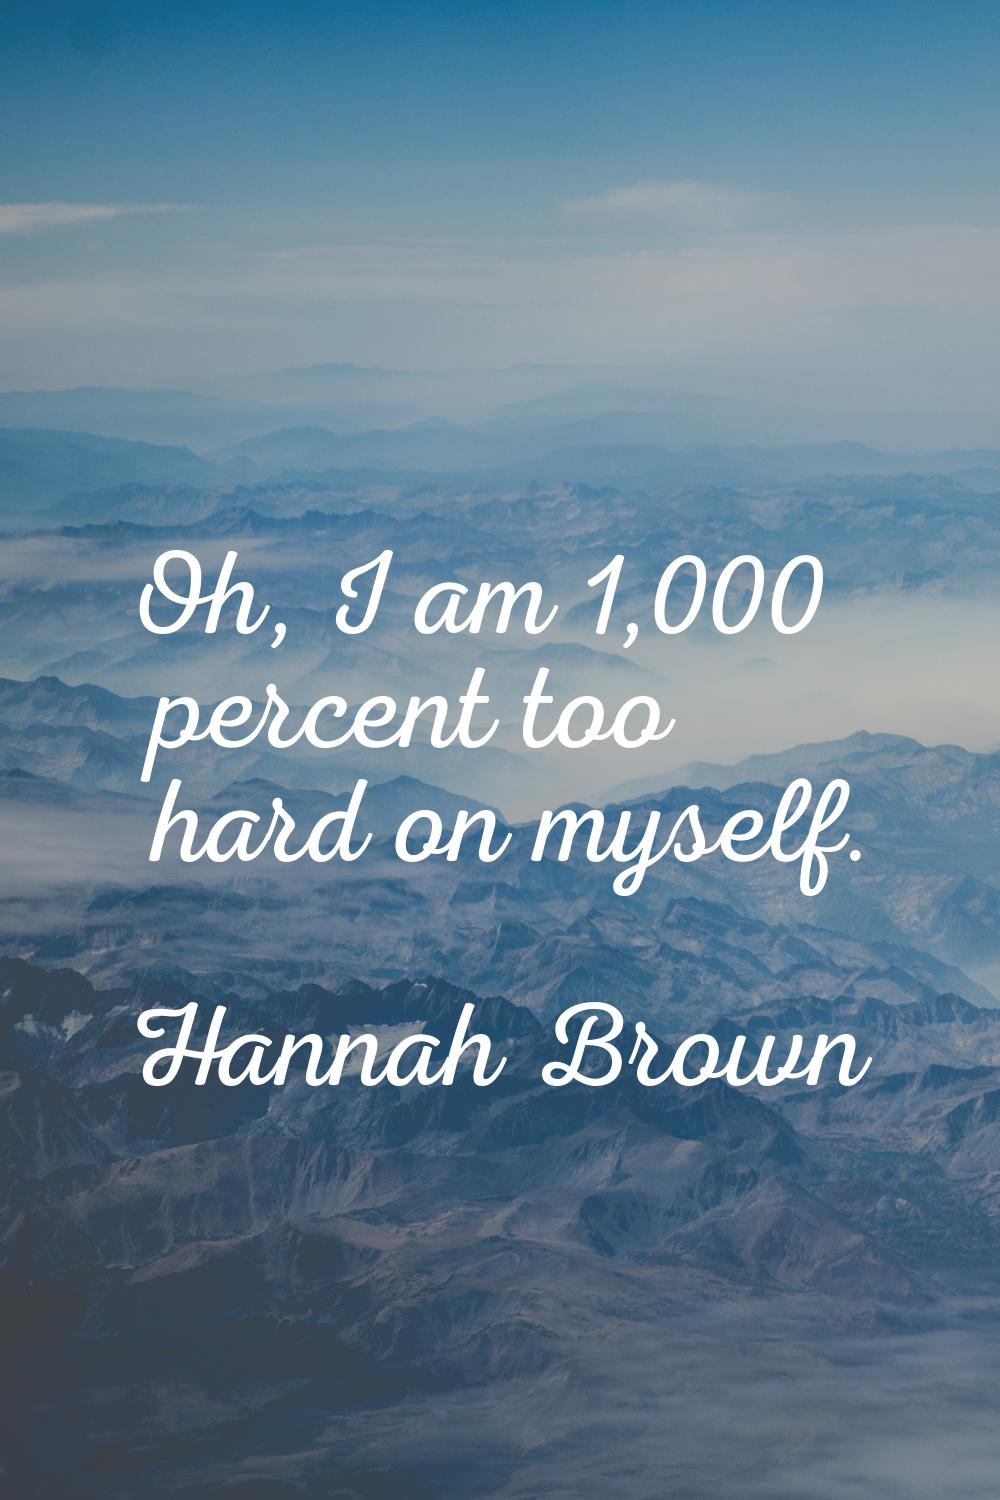 Oh, I am 1,000 percent too hard on myself.